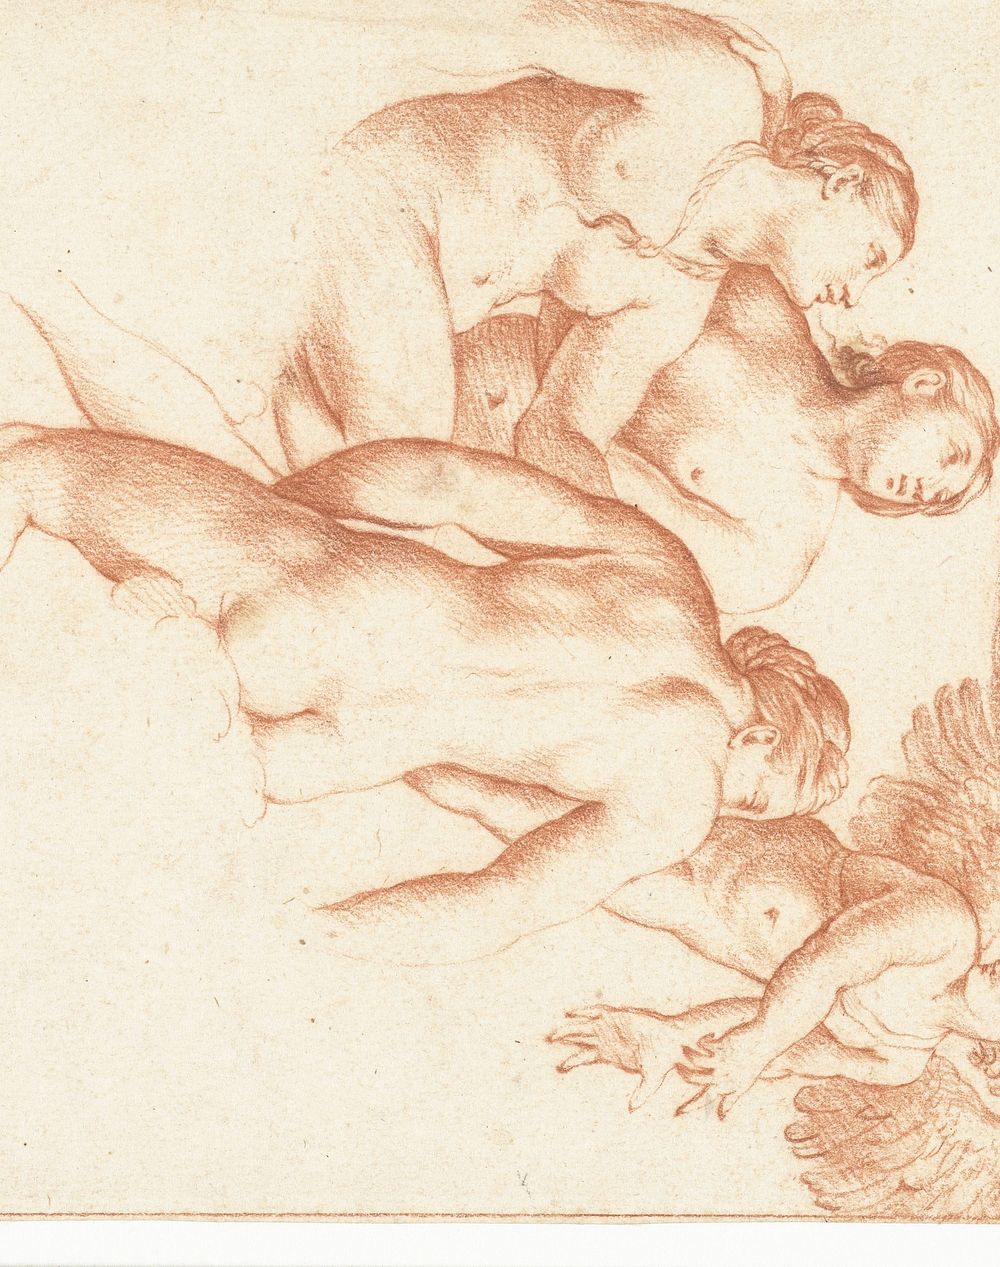 Amor en de drie gratiën (1600 - 1667) by Cornelis van Poelenburch, François Perrier and Rafaël